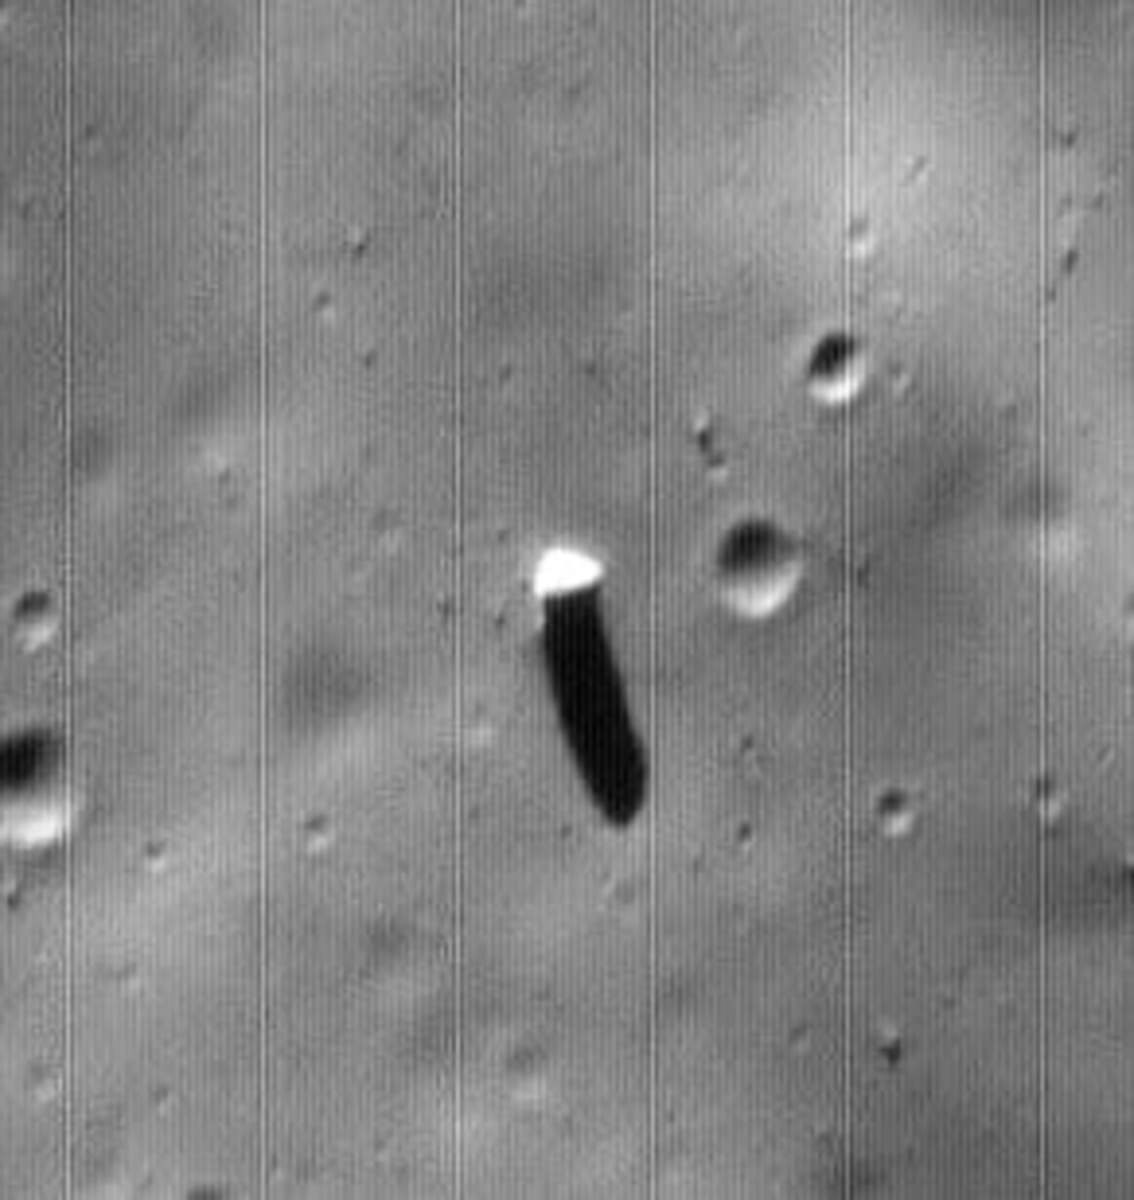 The Phobos Monolith